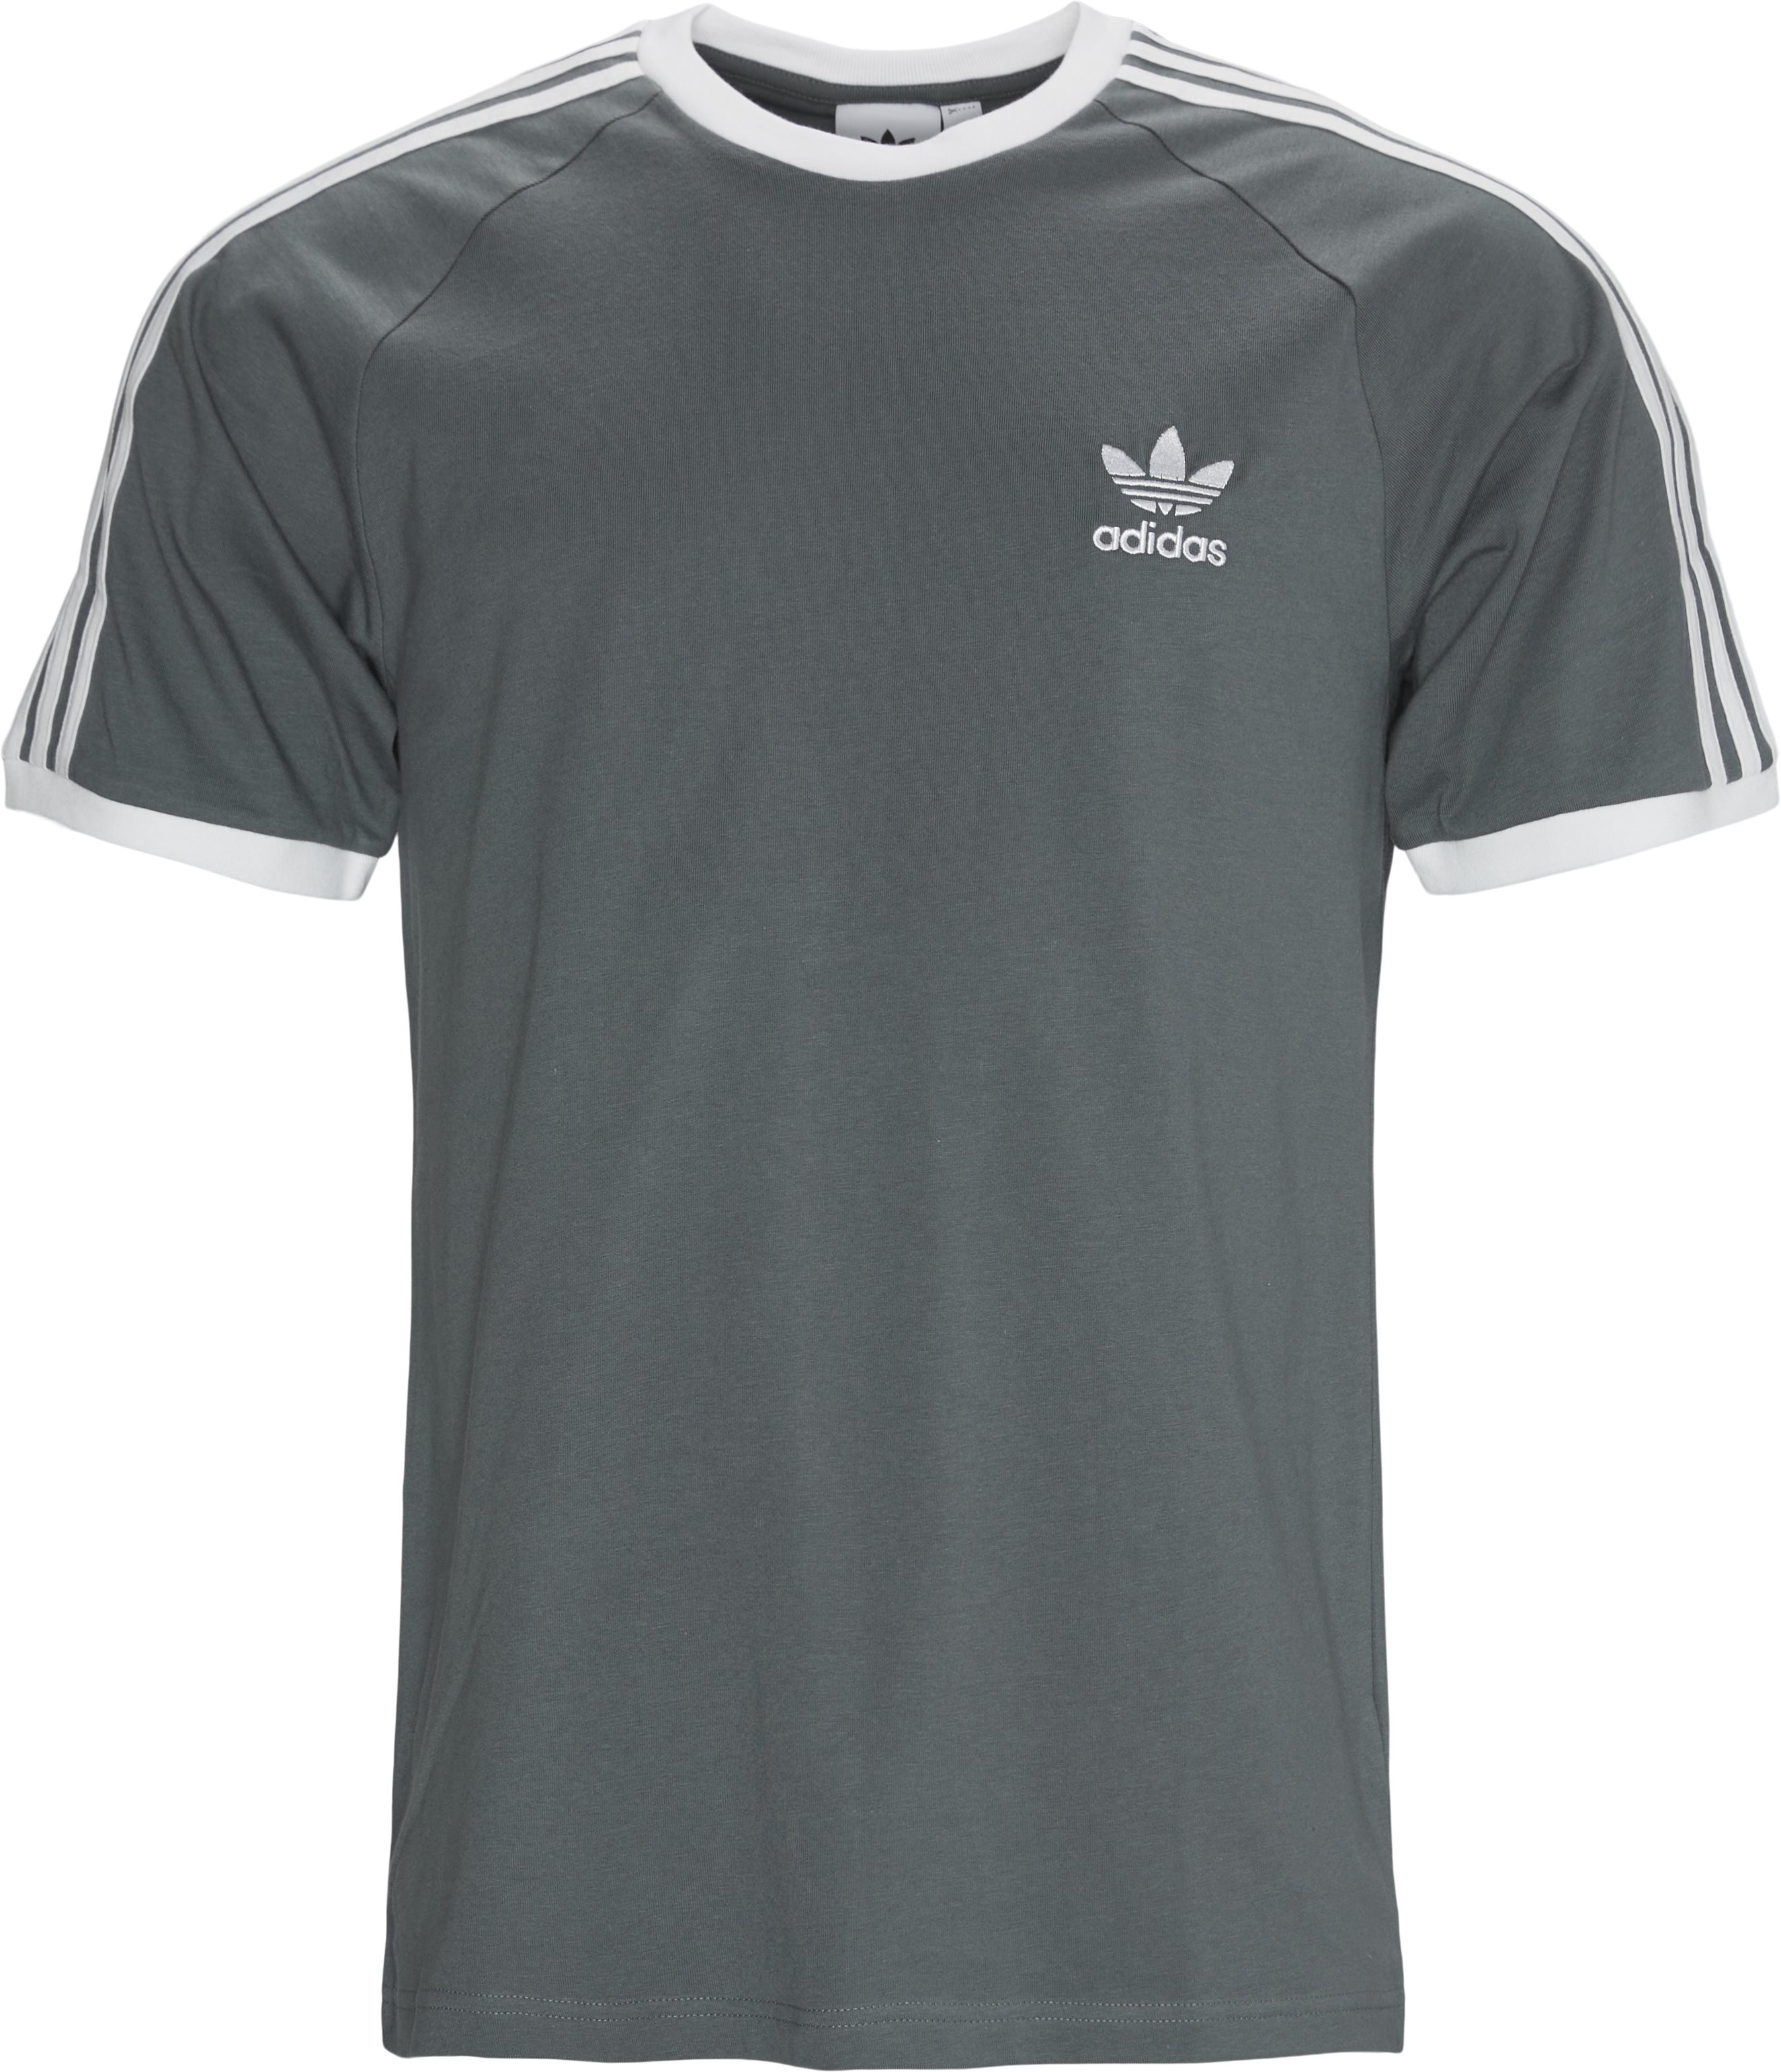 3 Stripes Tee - T-shirts - Regular fit - Grey